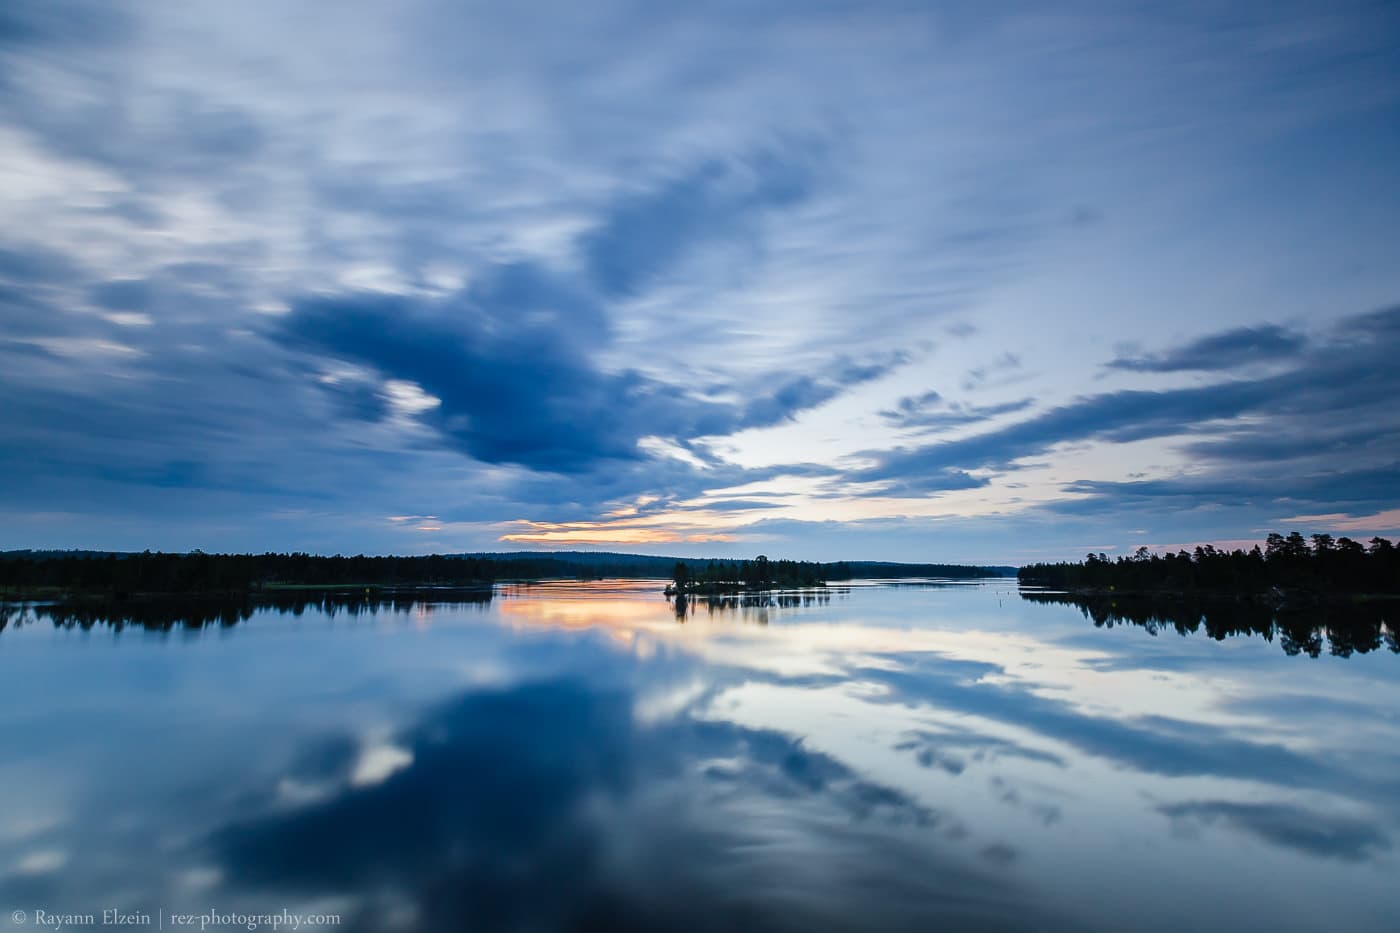 Perfectly calm water reflecting the sky on the Paatsjoki River